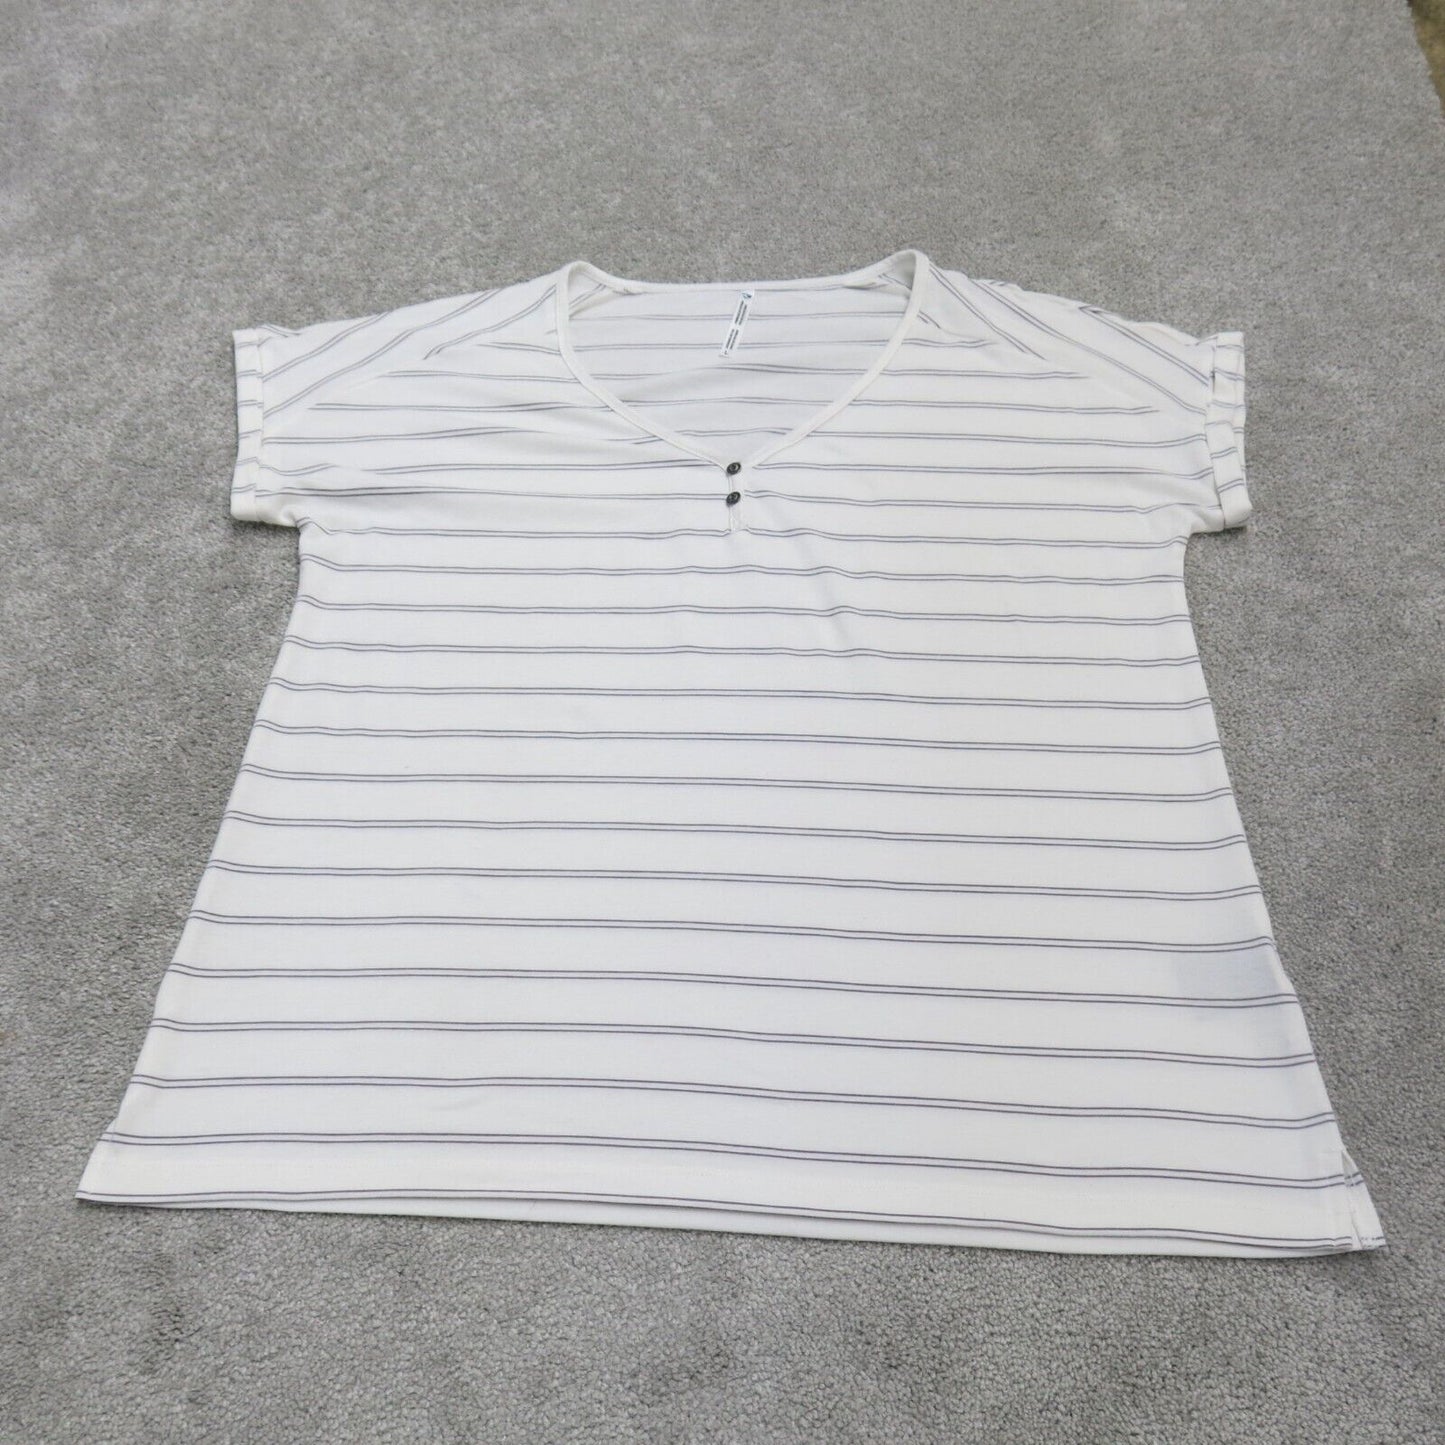 Vintage Womens Henley V Neck T Shirt Top Striped Short Sleeve White Size Large